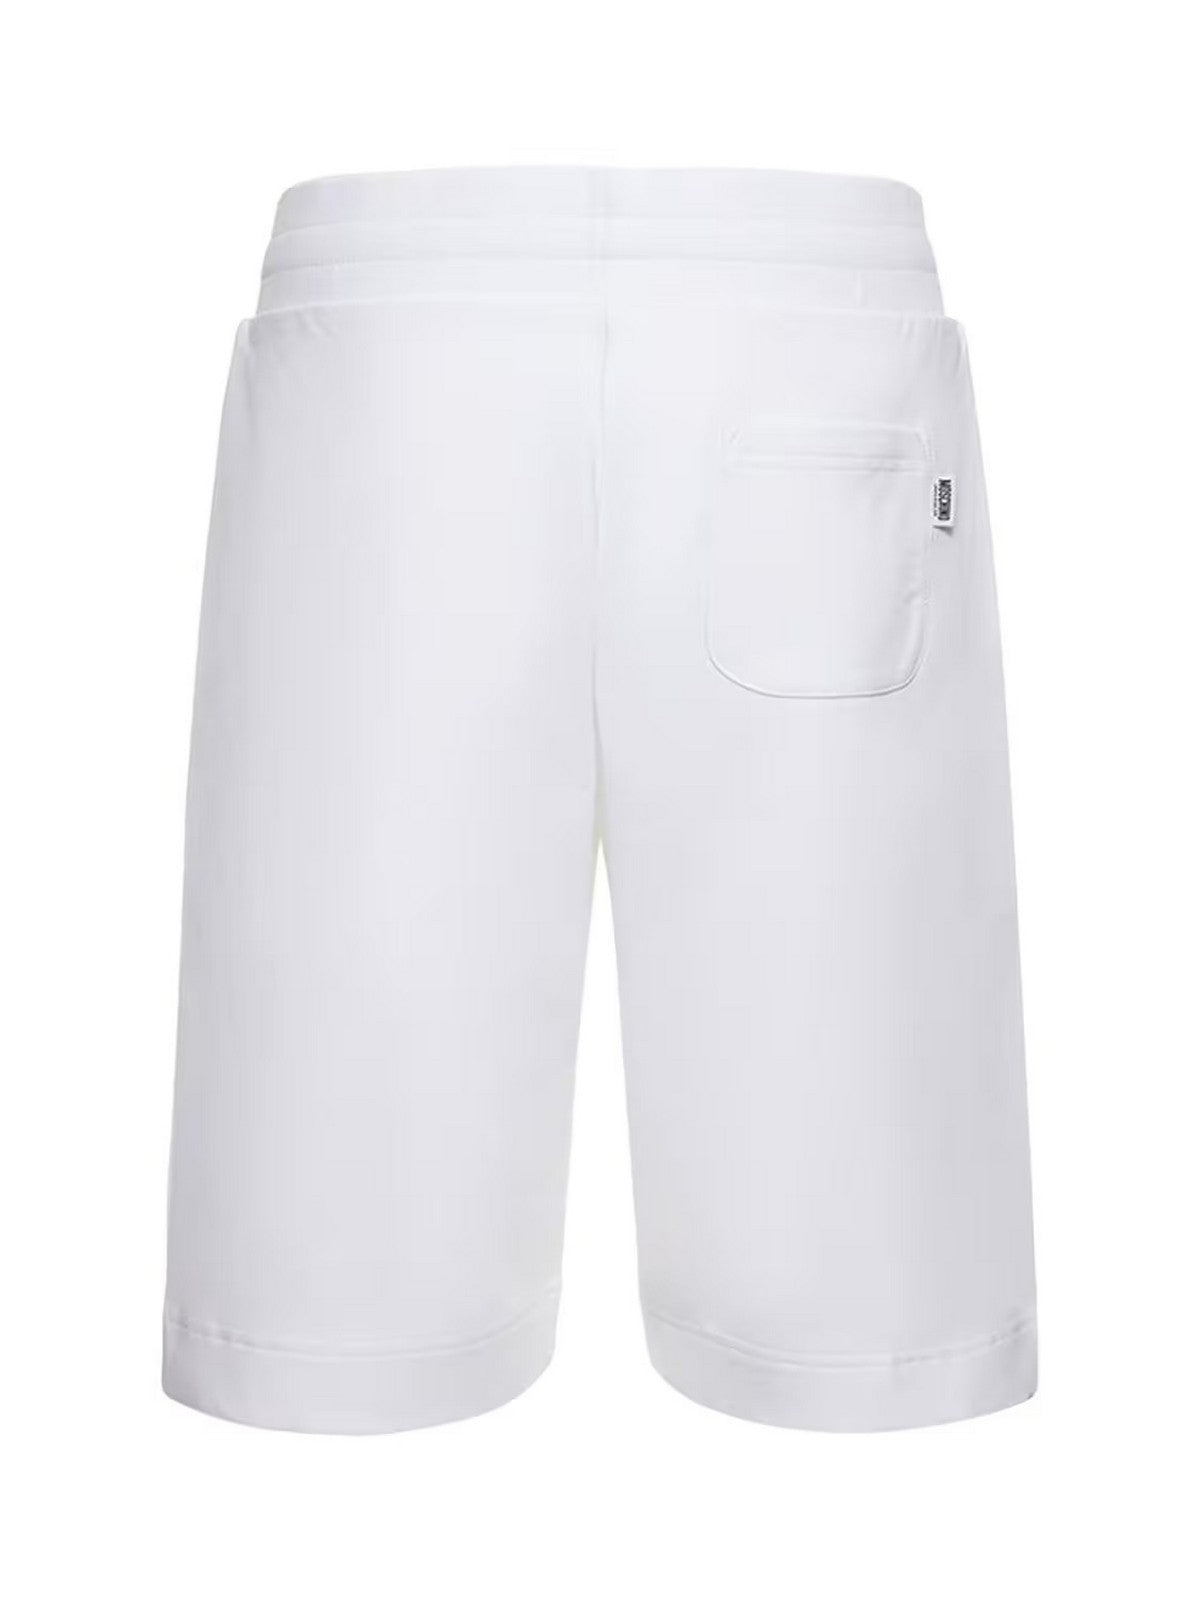 MOSCHINO UNDERWEAR Pantalone Uomo  V1A6887 4409 0001 Bianco